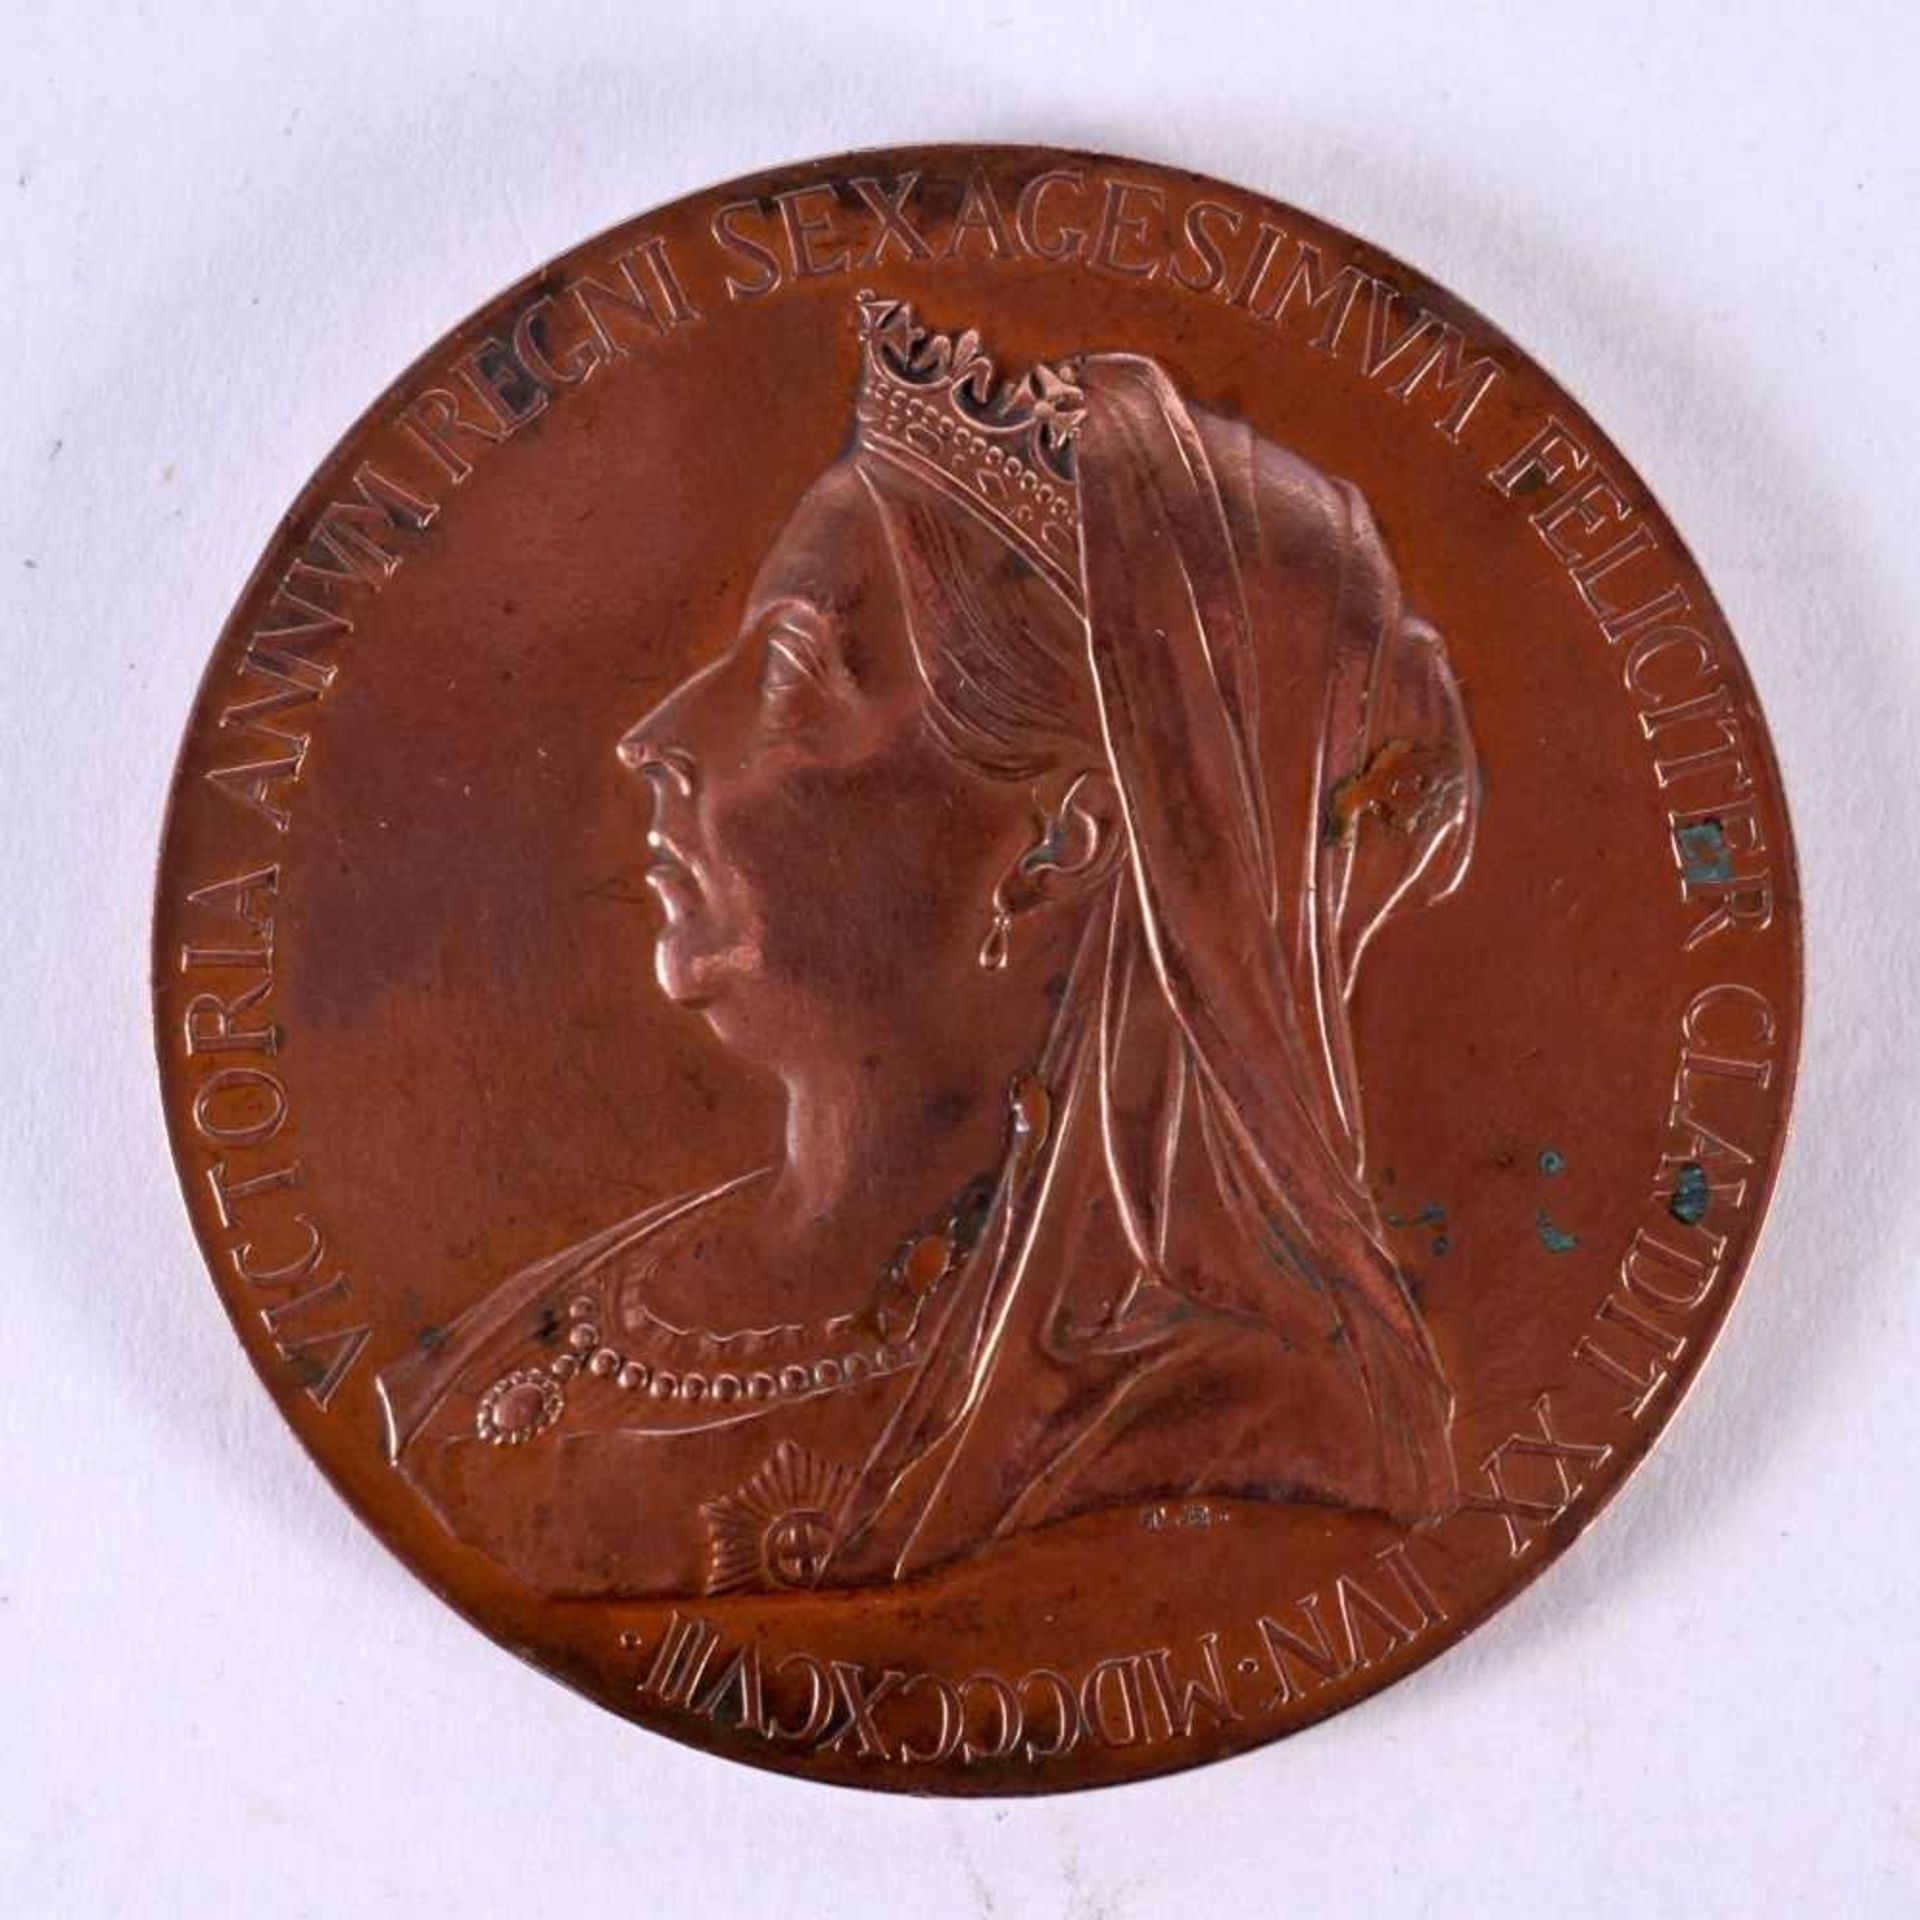 1837-1897 GREAT BRITAIN - QUEEN VICTORIA'S DIAMOND JUBILEE MEDALLION. 5.5cm diameter, weight 75g